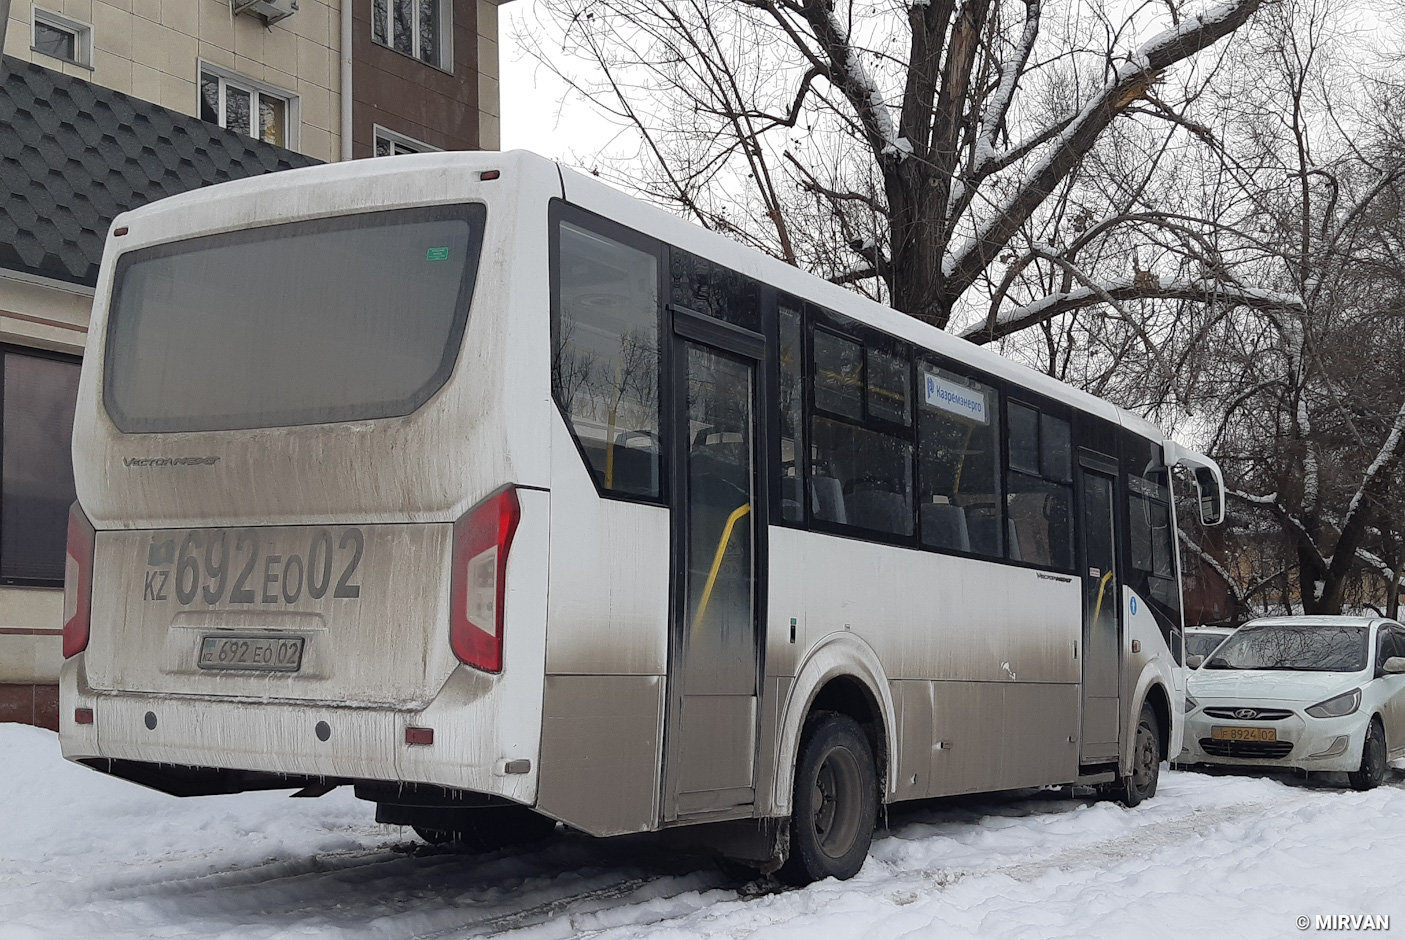 Almaty, PAZ-320455-04 "Vector Next" (LD, LS) # 692 EO 02